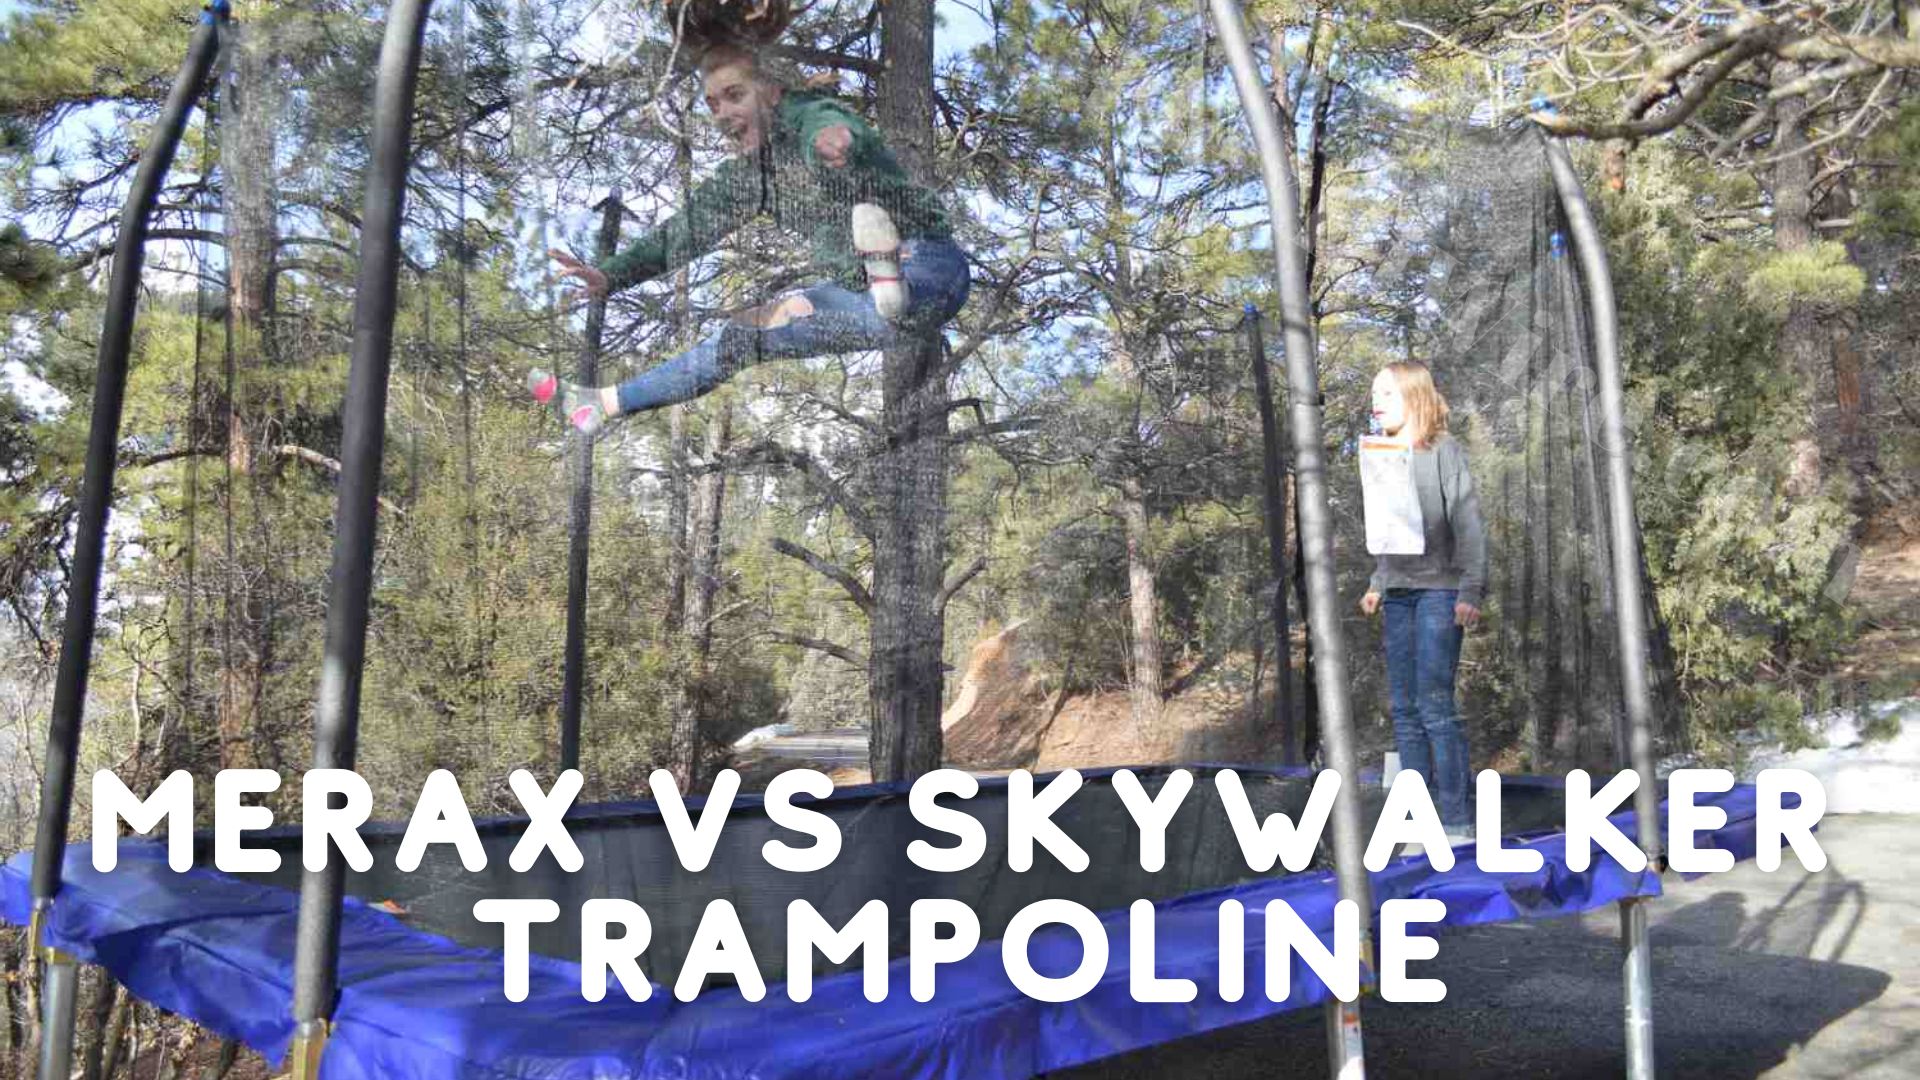 Merax vs Skywalker trampoline